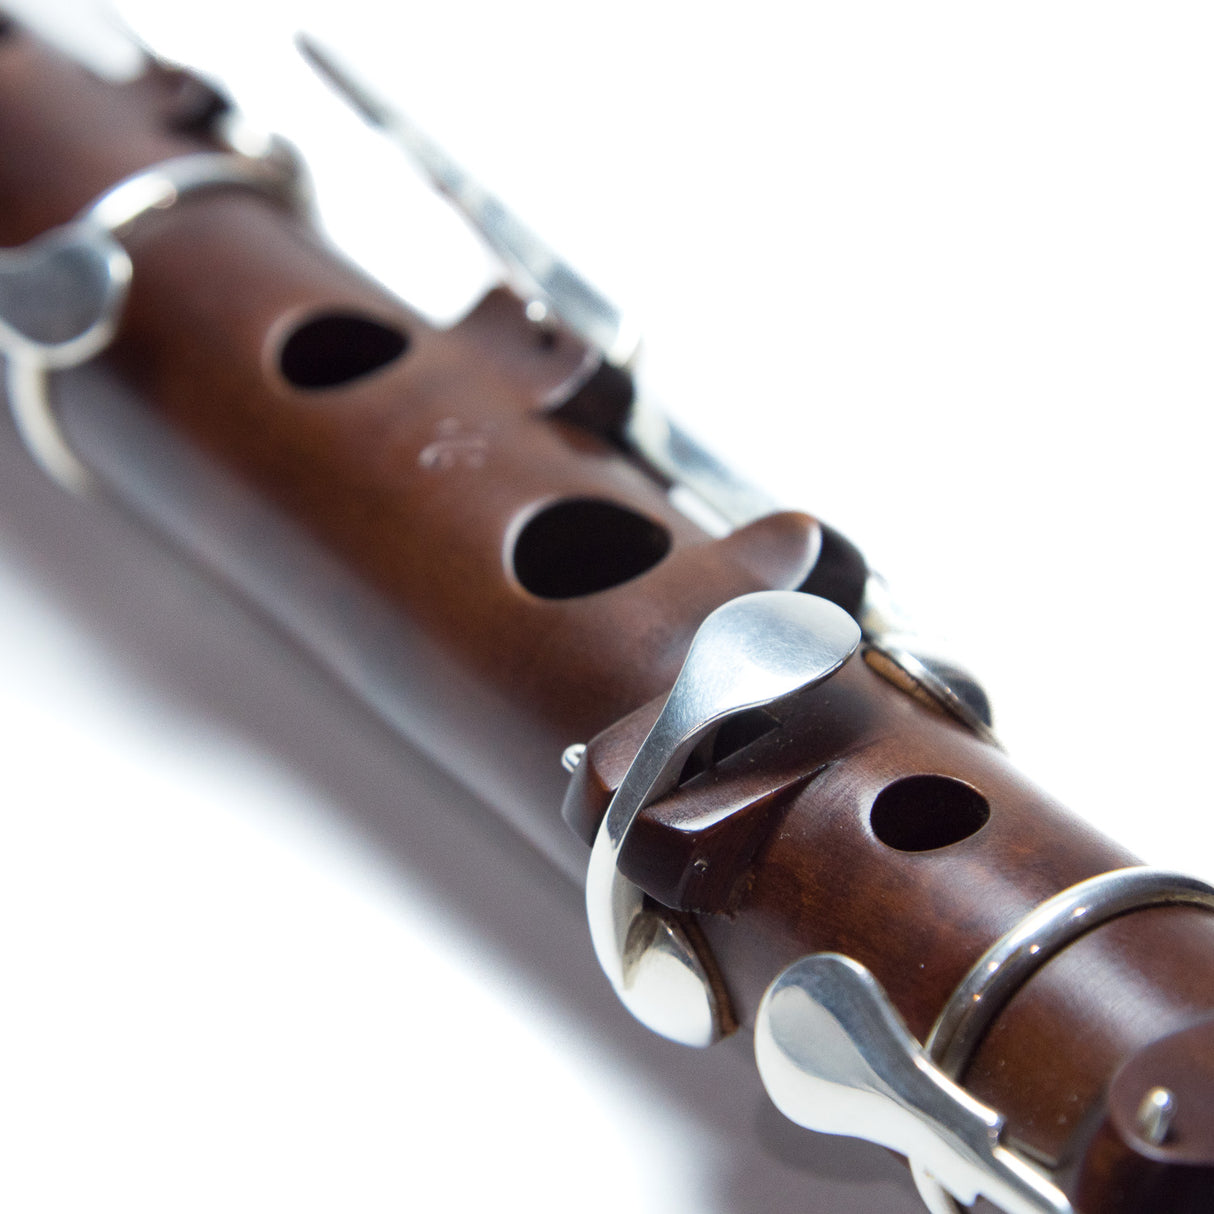 Paddy Ward 6-Key Stained Boxwood Hawkes Model Irish Flute